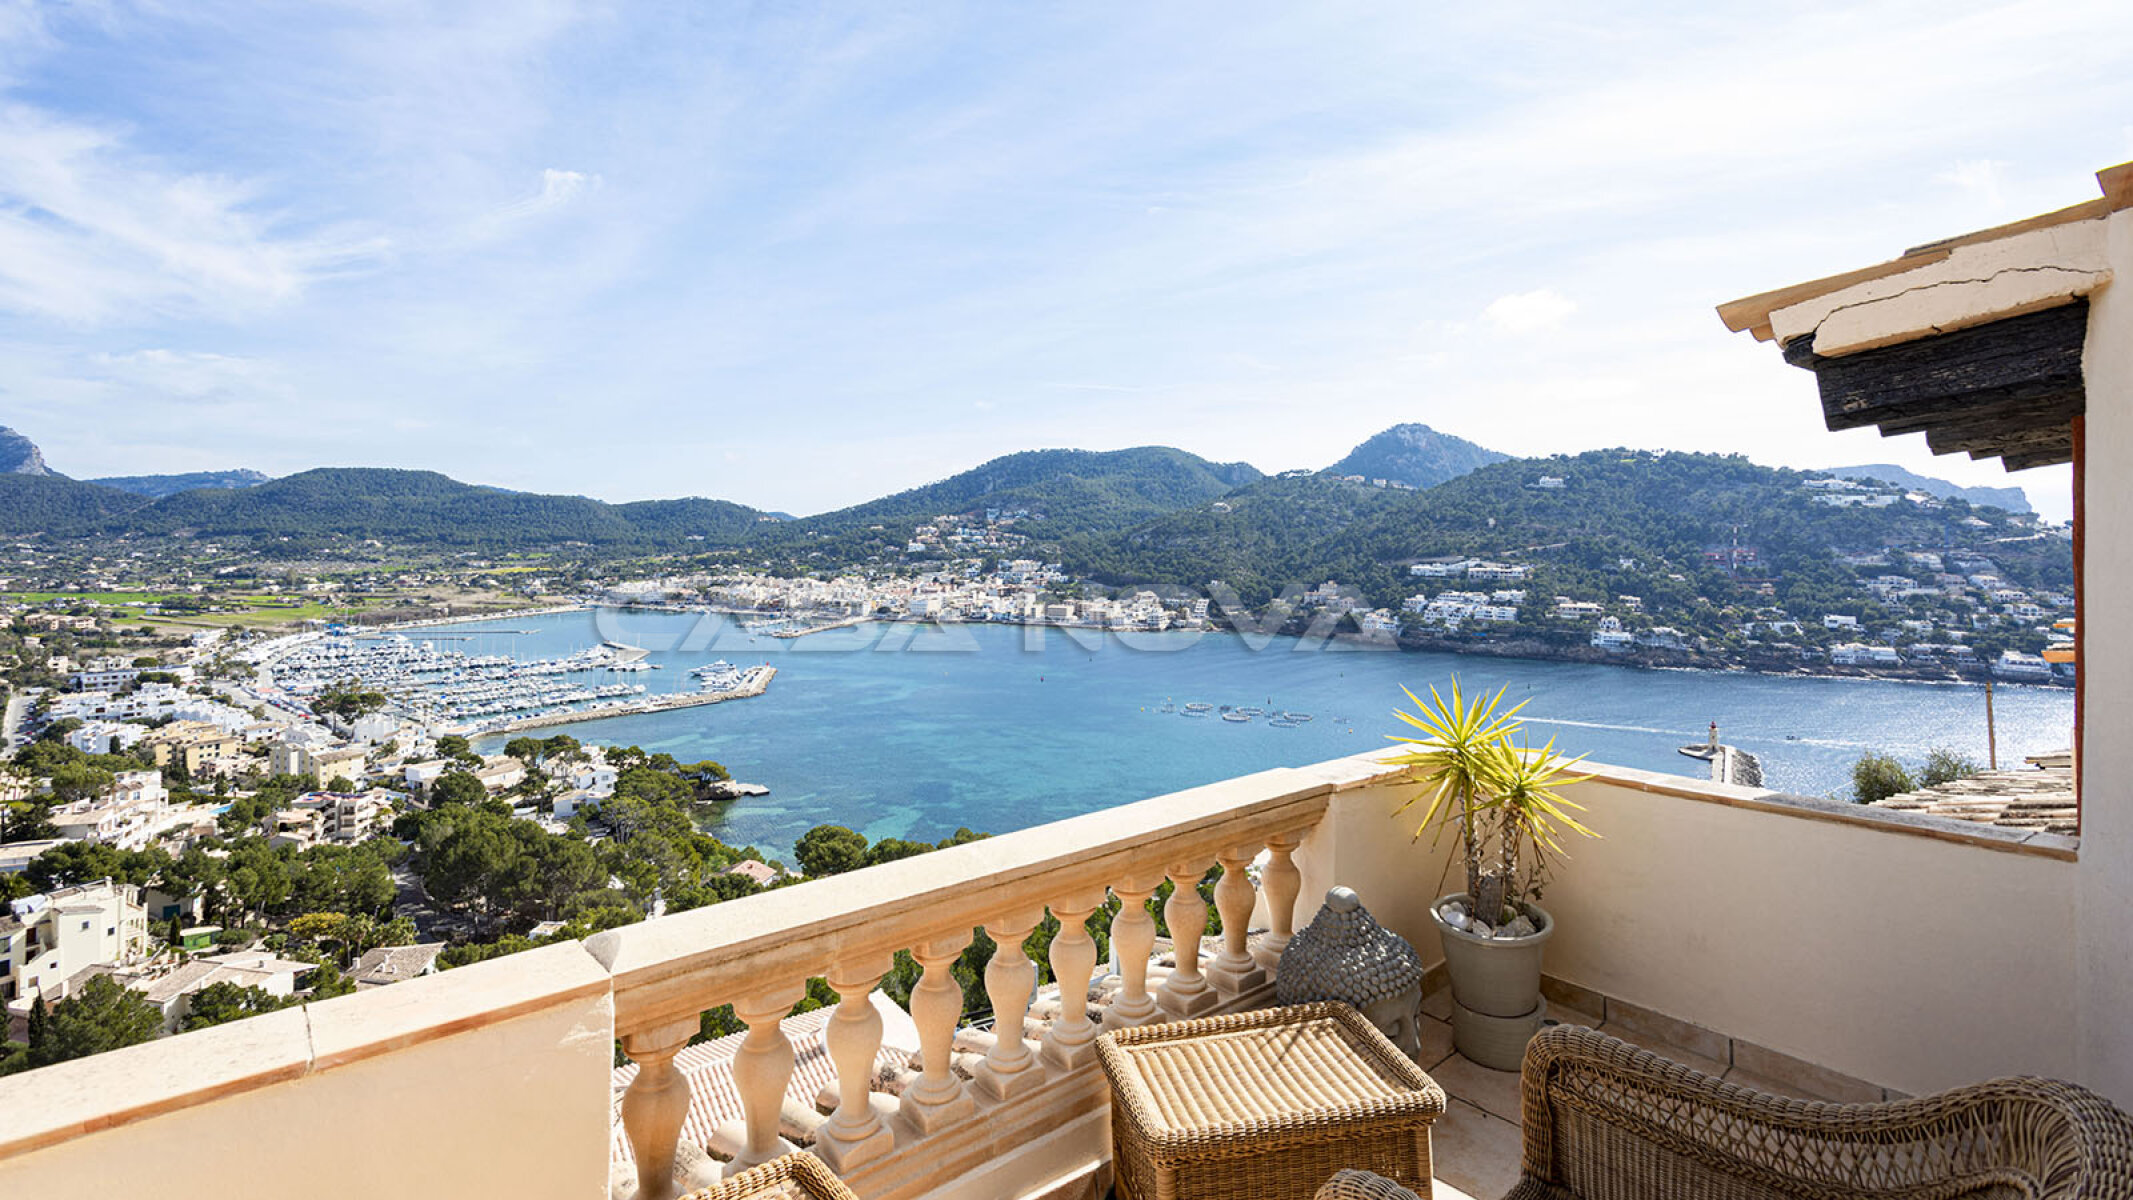 Sch�nes Mallorca Apartment mit sensationellem Blick